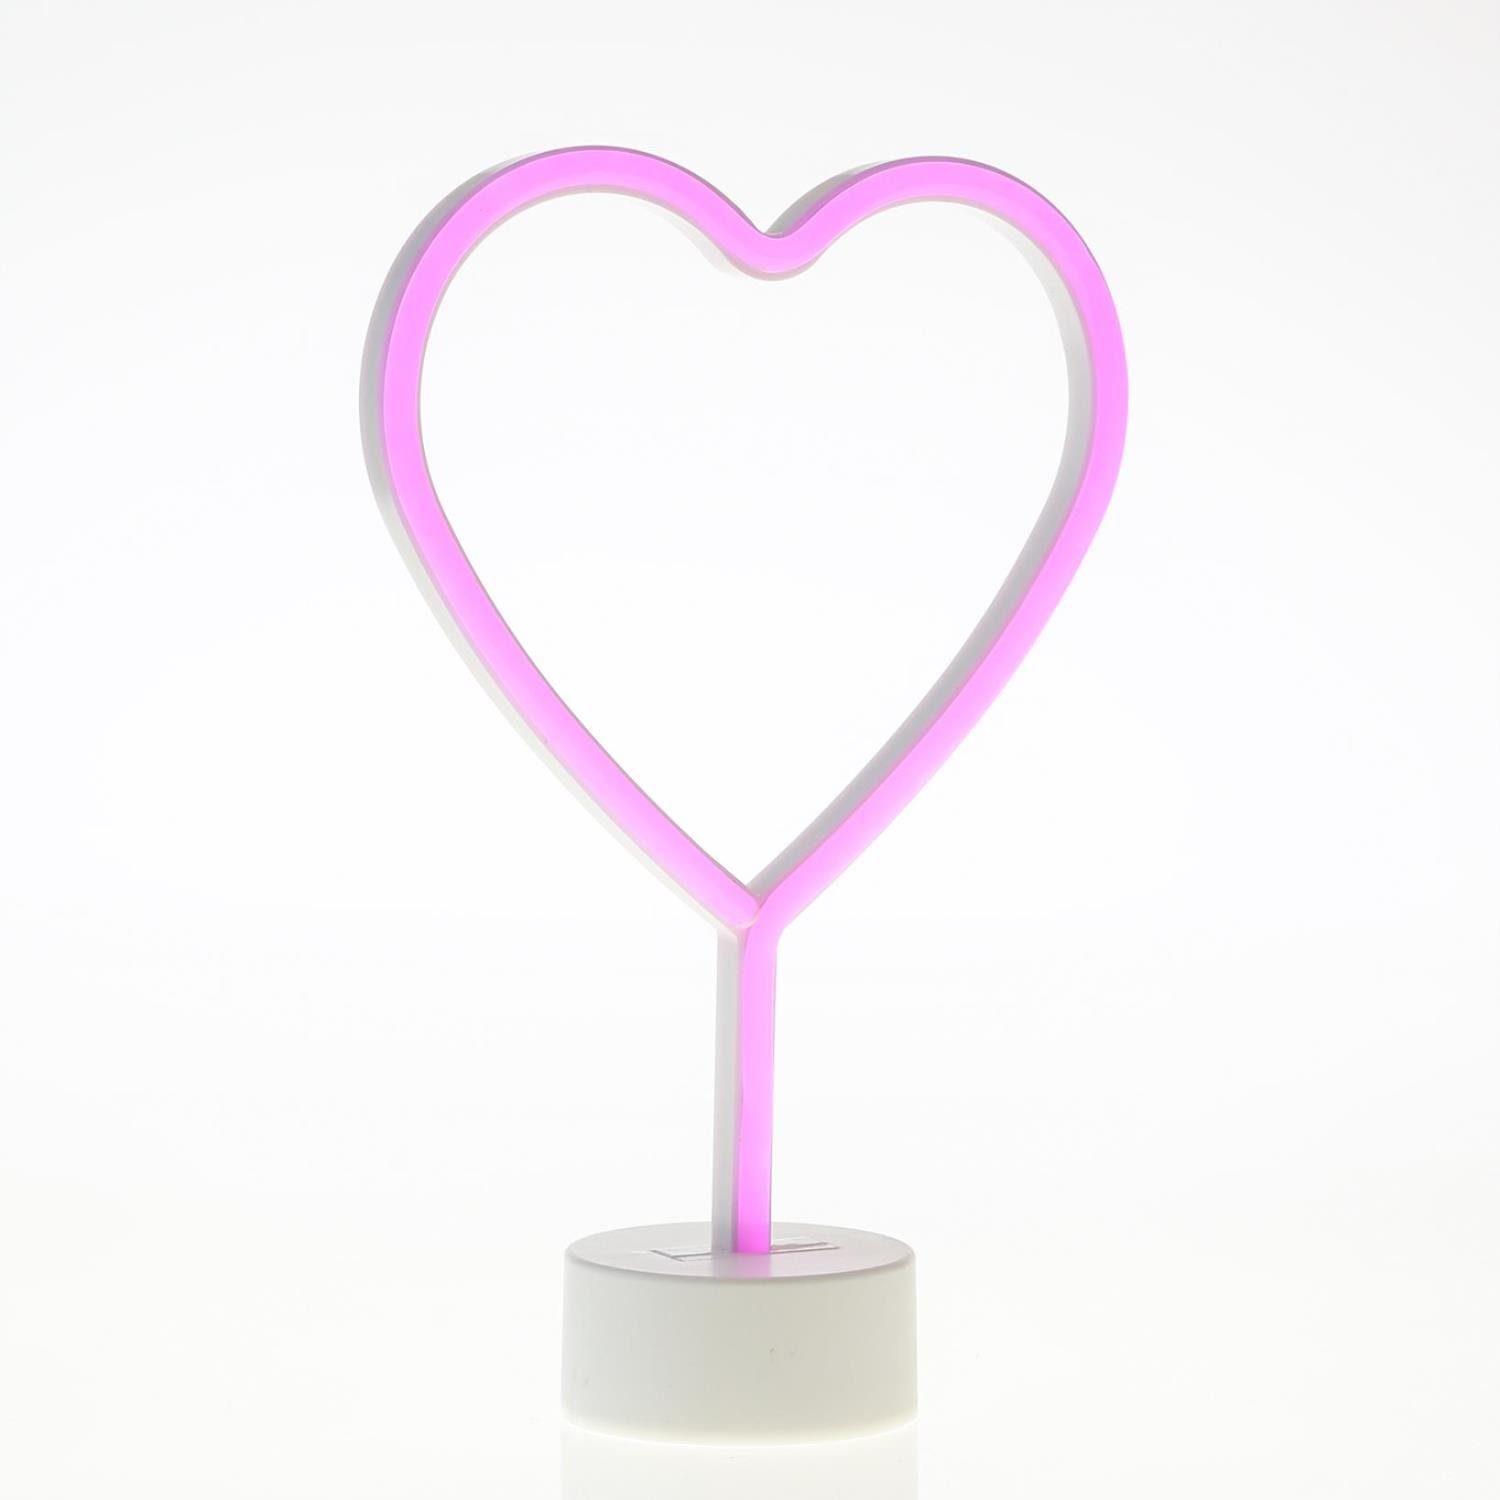 SATISFIRE LED Dekolicht LED Neonlicht Herz pink Neonschild Leuchtfigur Batterie USB 30cm, LED Classic, pink